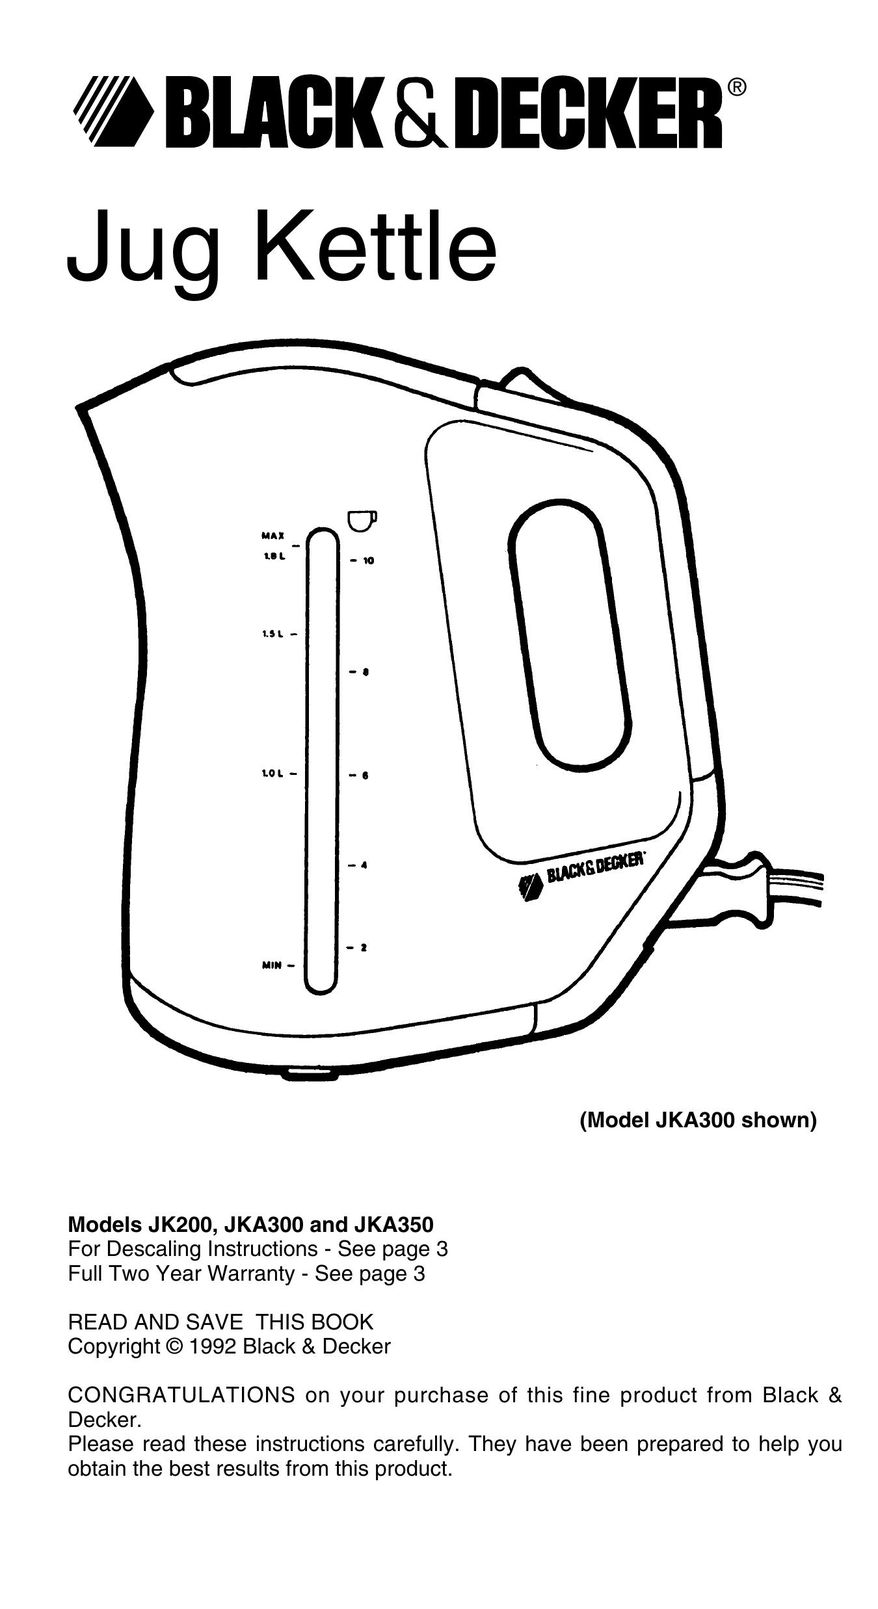 Black & Decker JKA300 Hot Beverage Maker User Manual